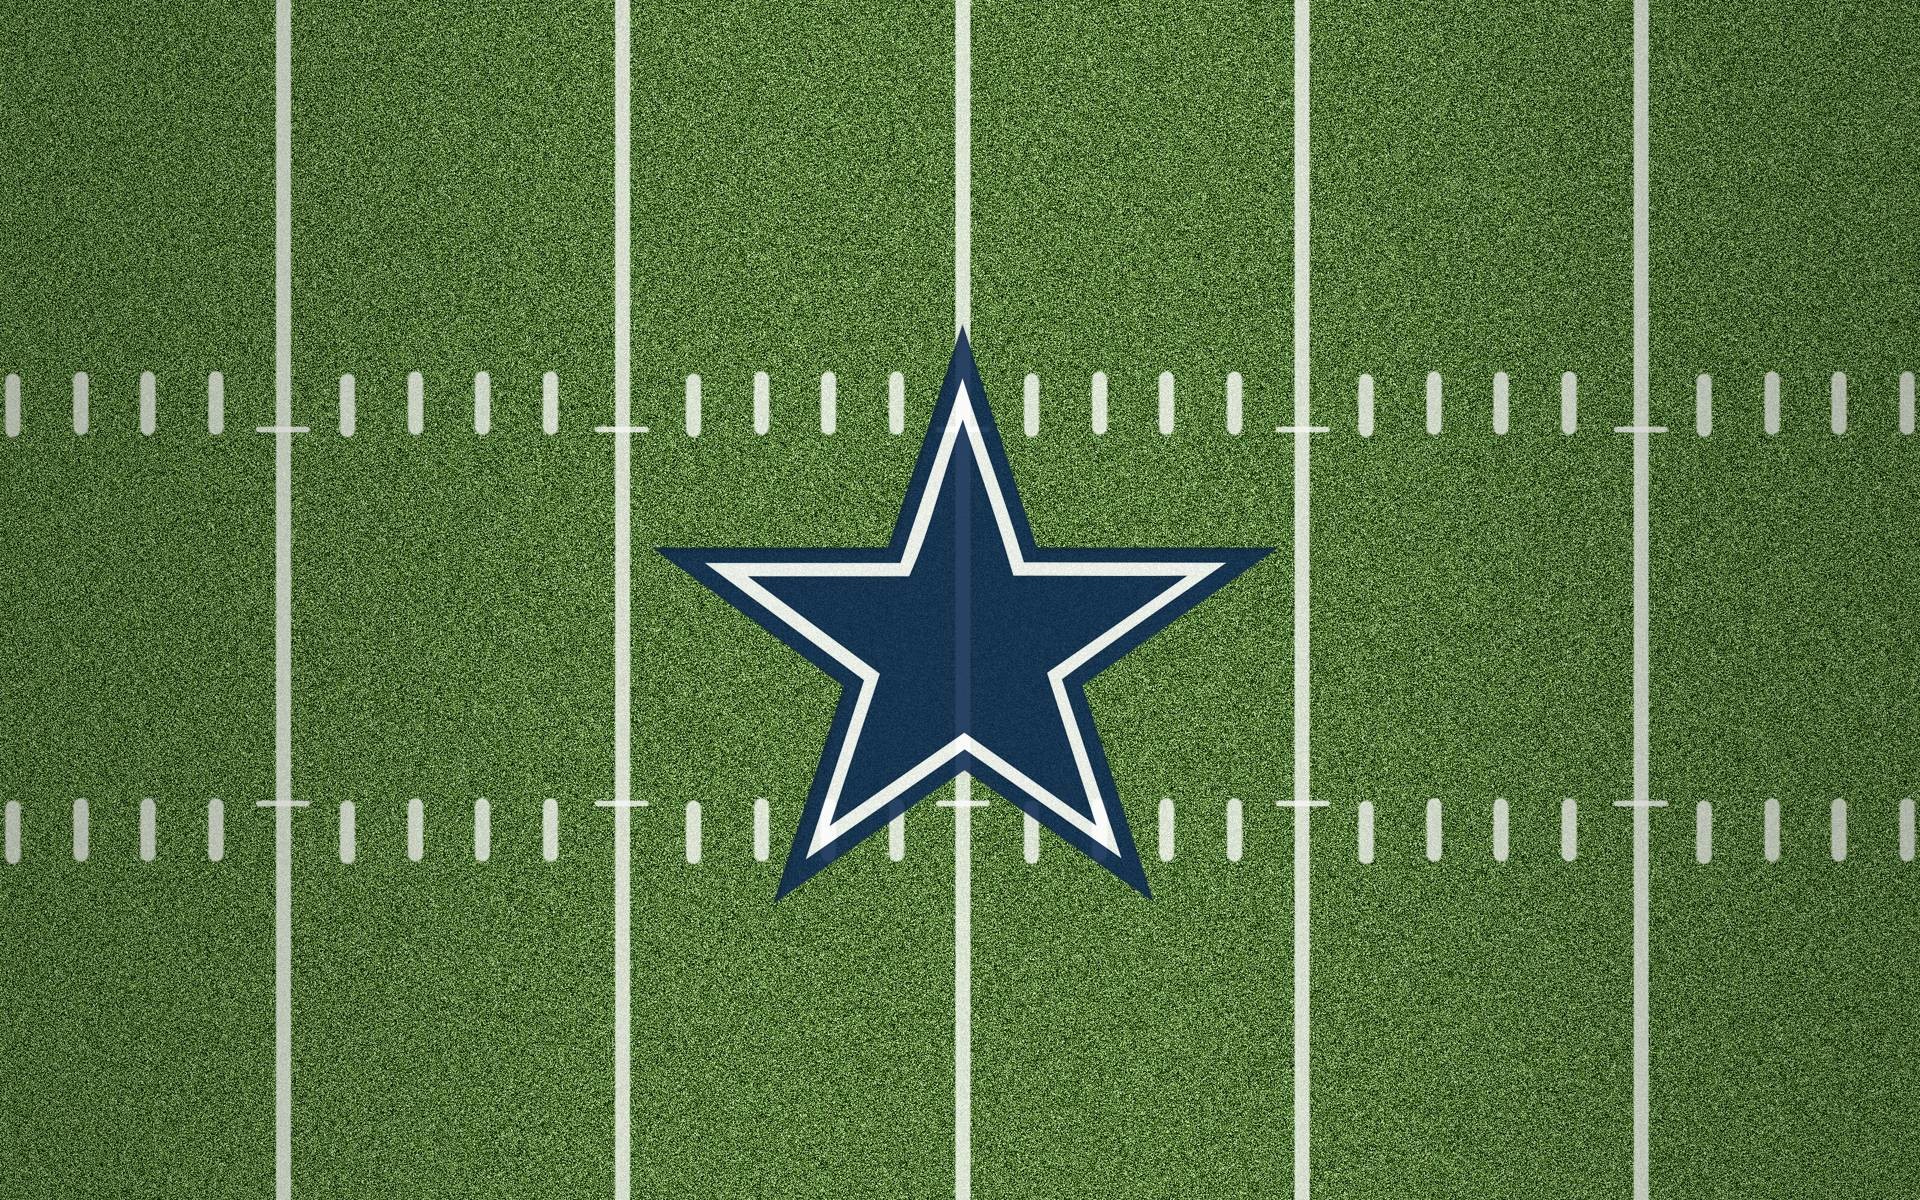 Dallas Cowboys Football Field Wallpaper HD